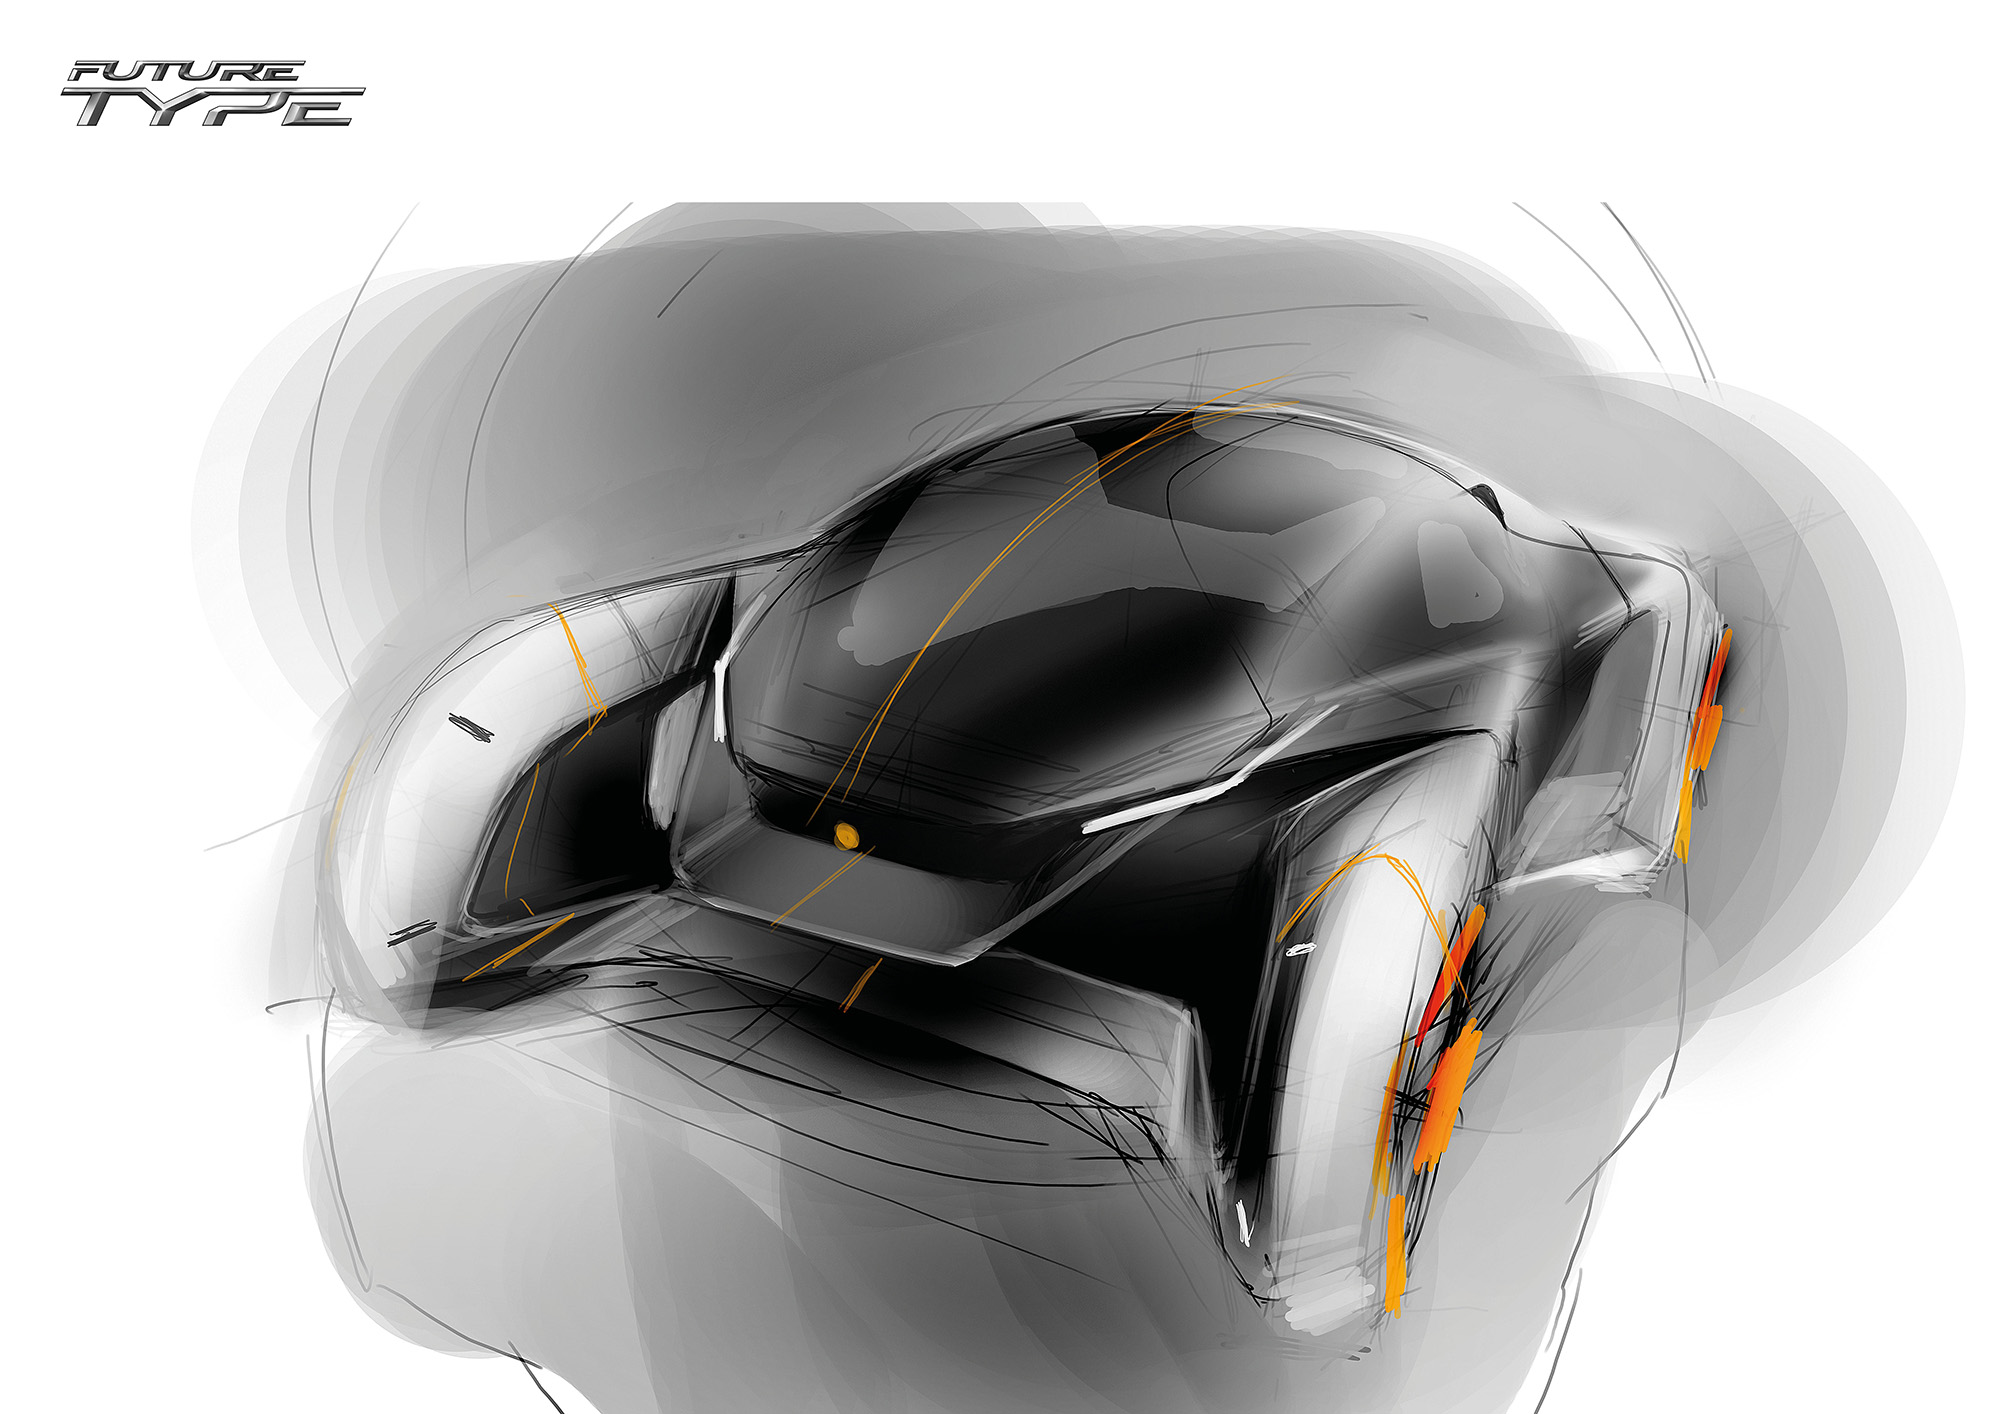 Premium Photo | Original concept car designs ideas for the automotive future